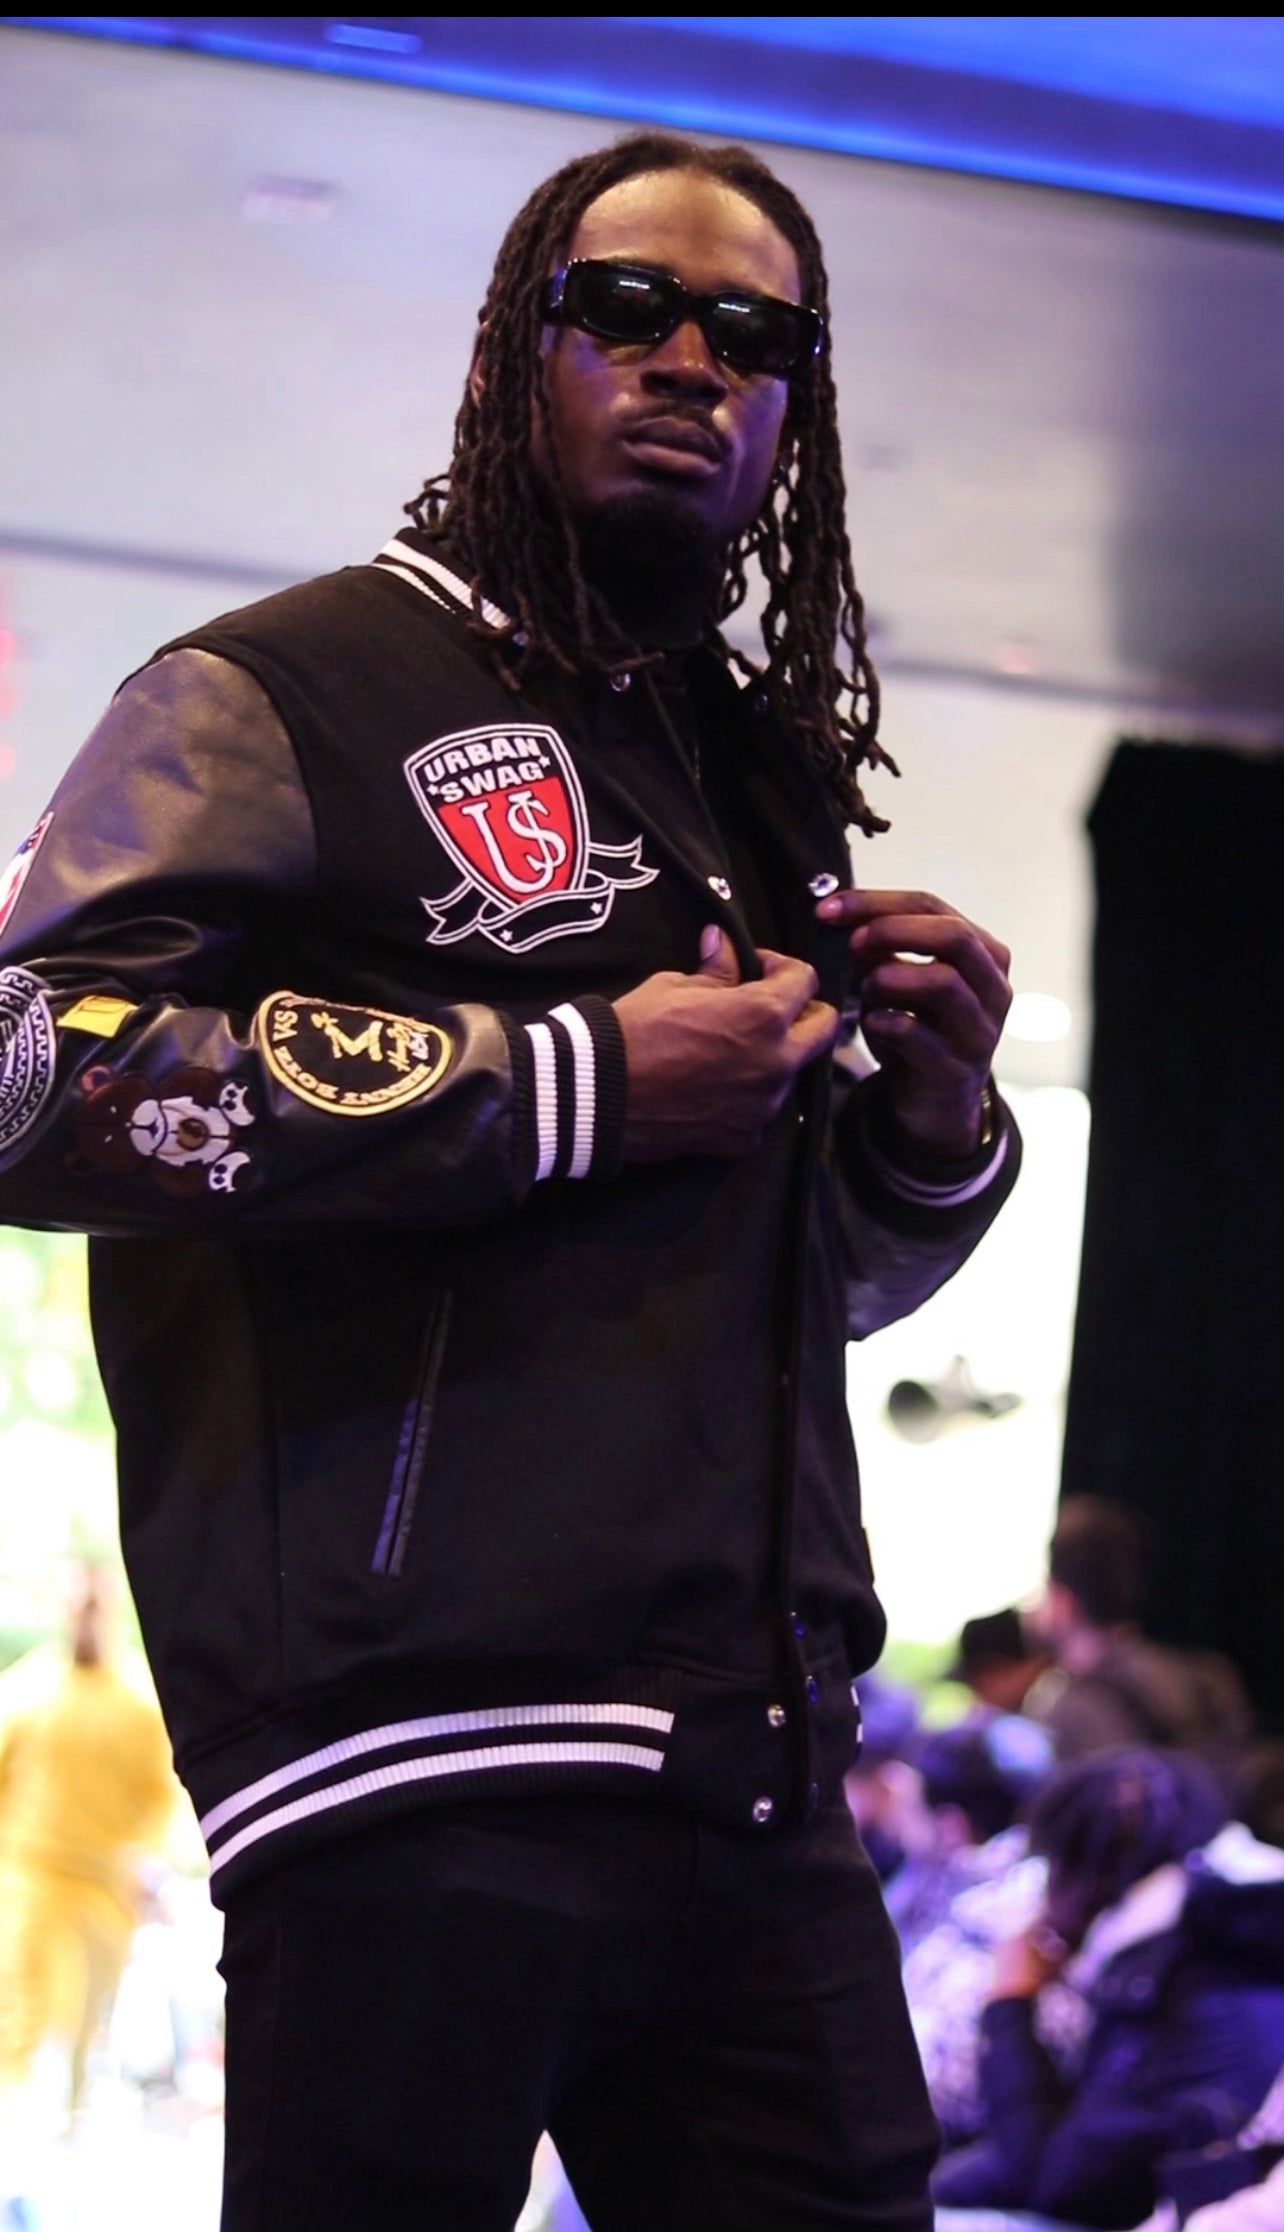 Black Urban Varsity Jacket – Urban Swag NYC